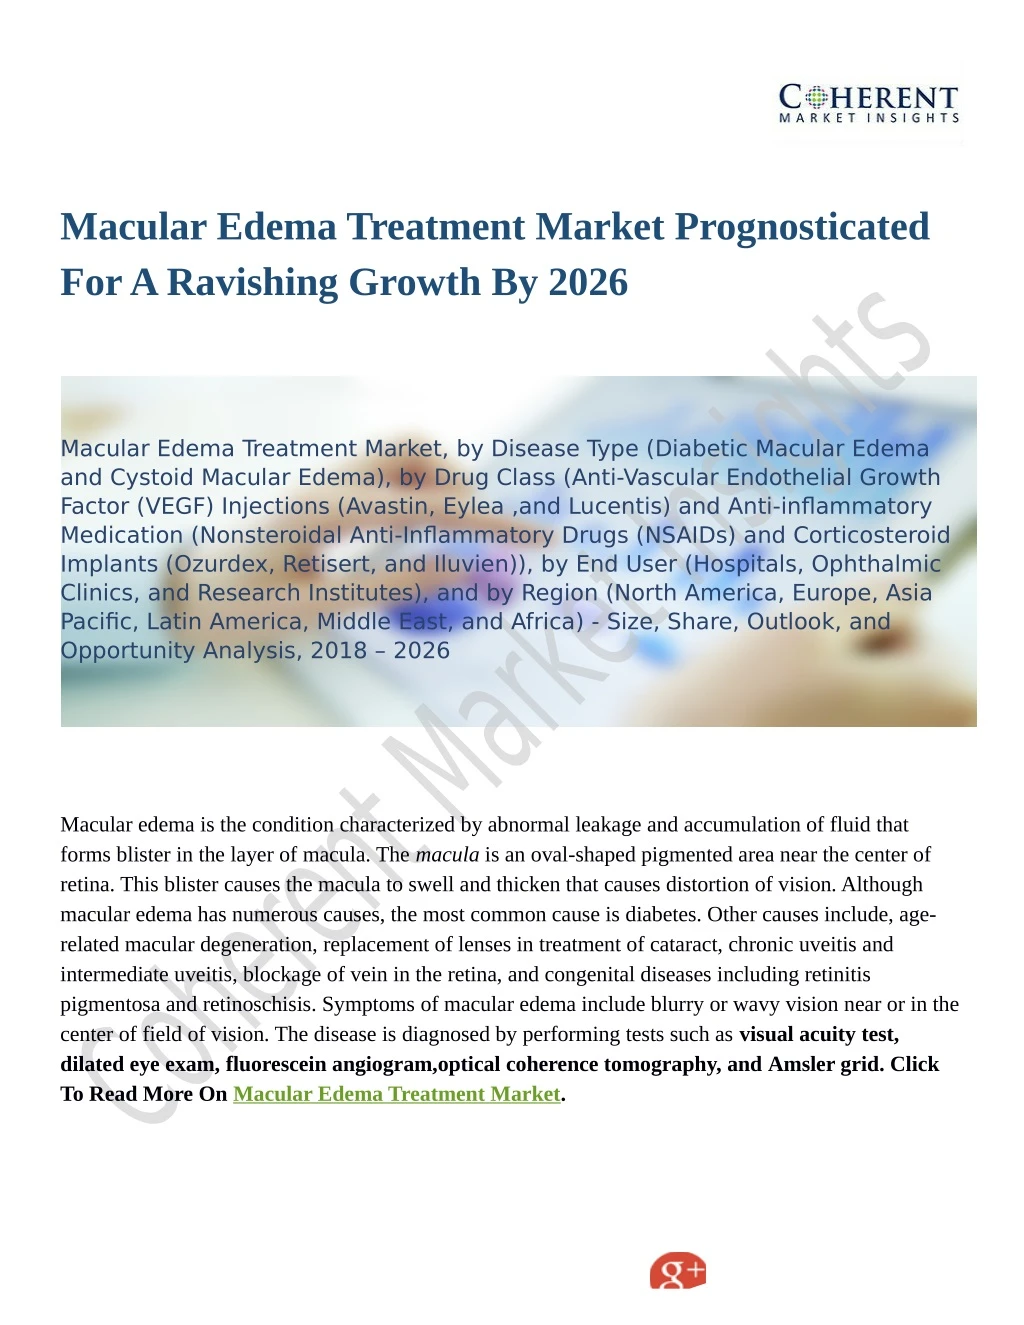 macular edema treatment market prognosticated